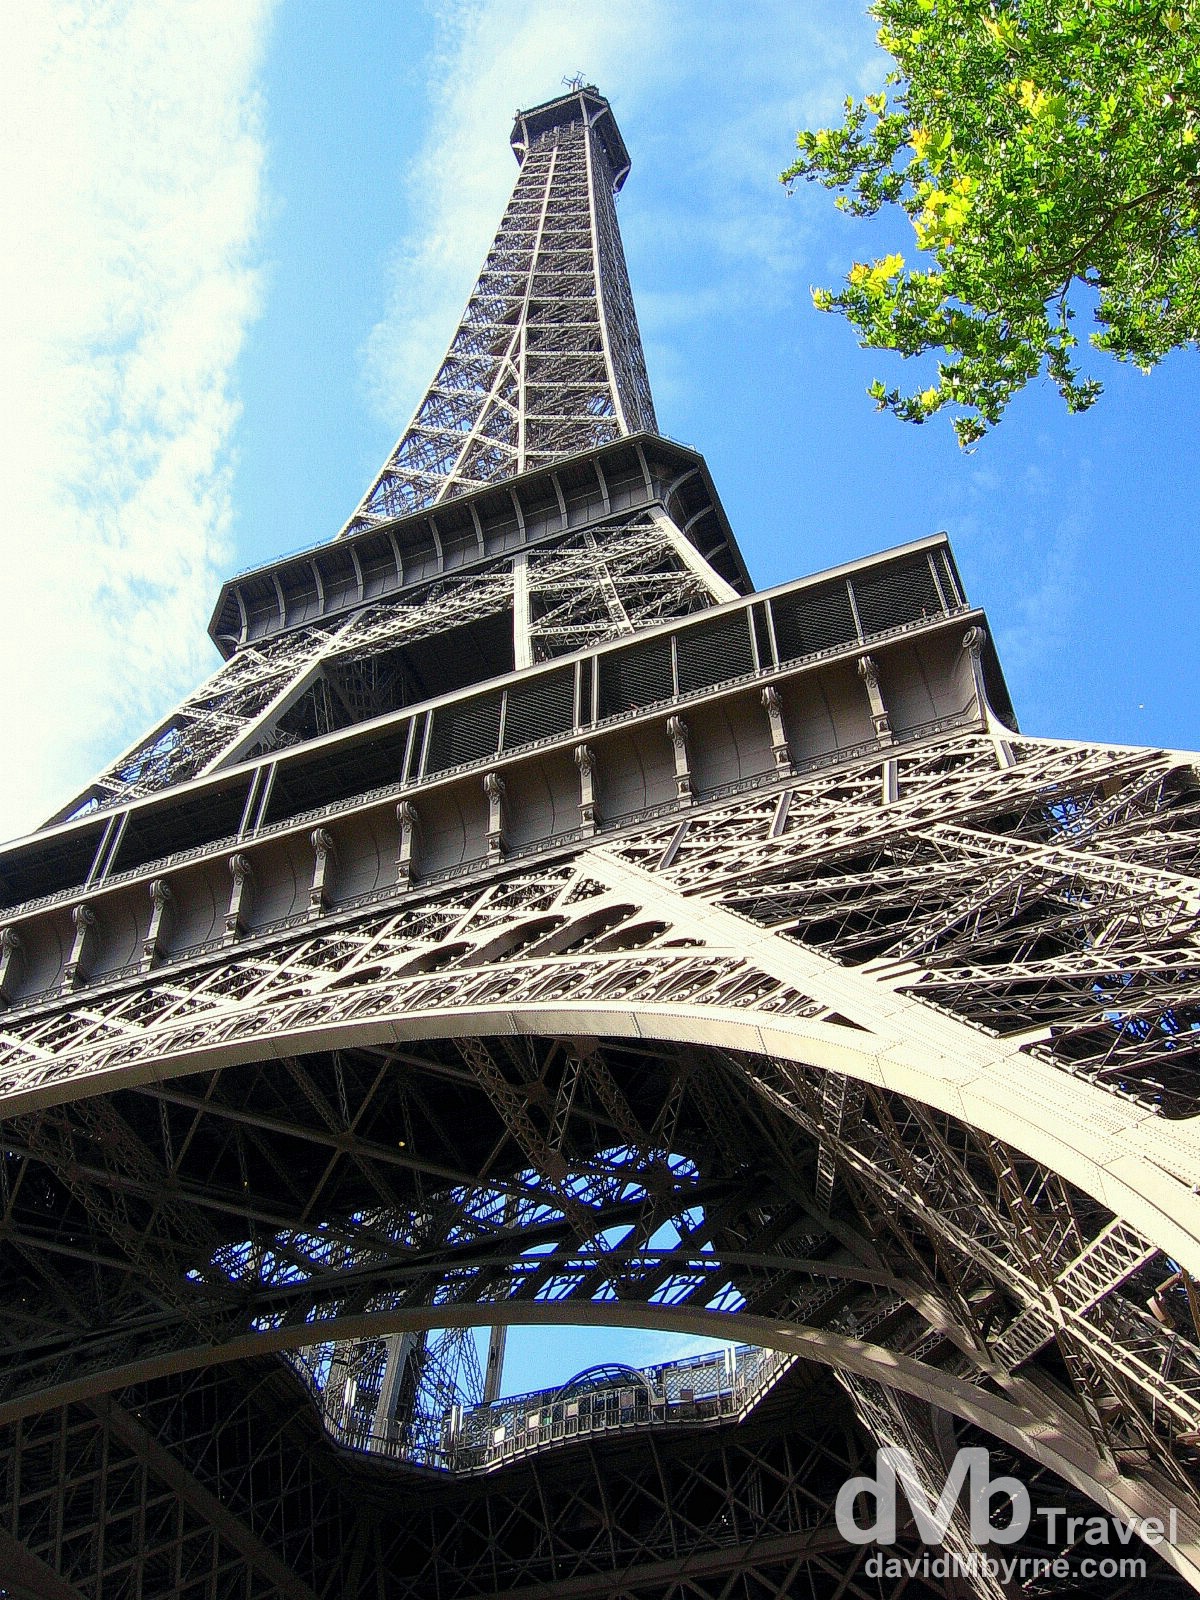 The Eiffel Tower, Paris, France. August 18th, 2007.